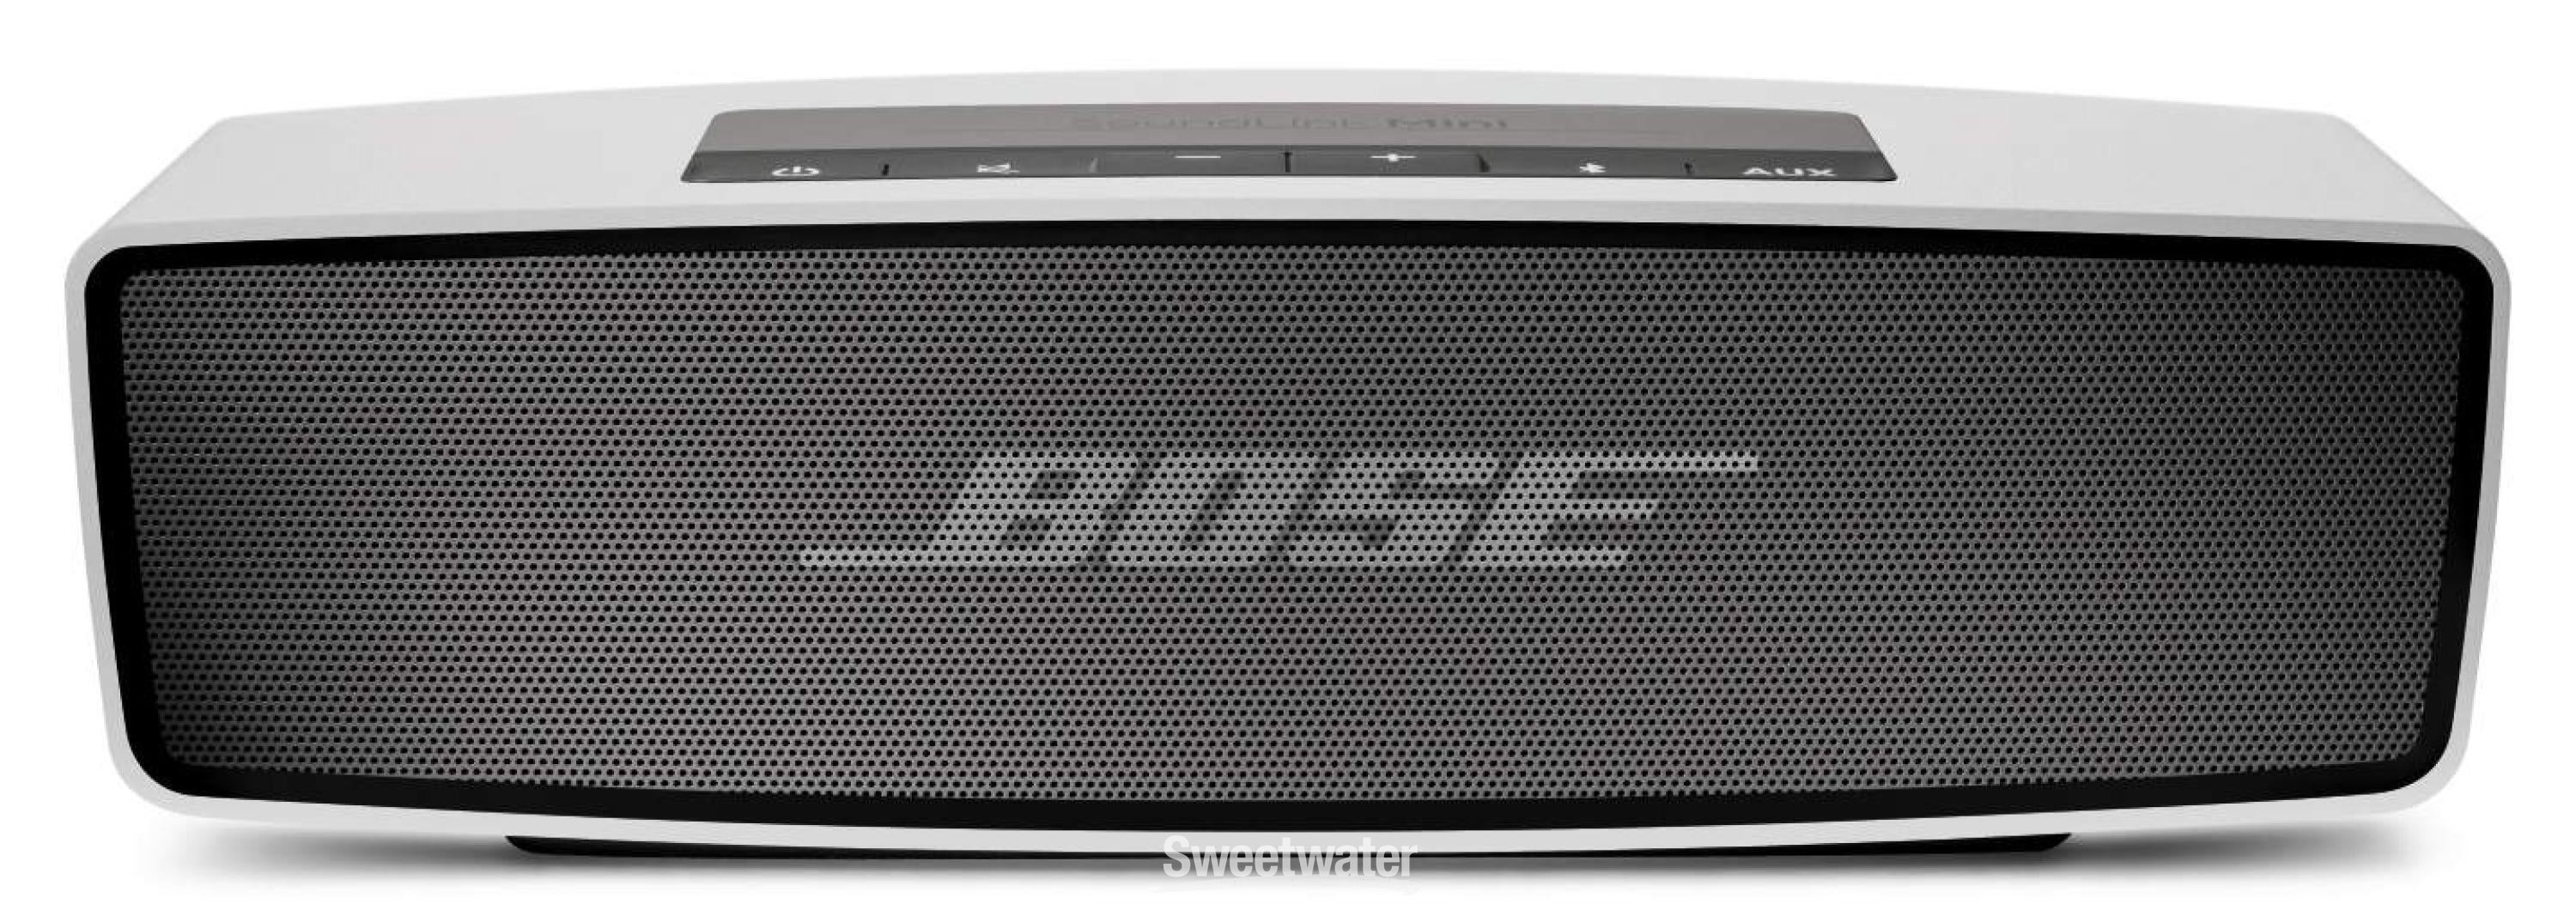 Bose SoundLink Mini Portable Bluetooth Speaker | Sweetwater